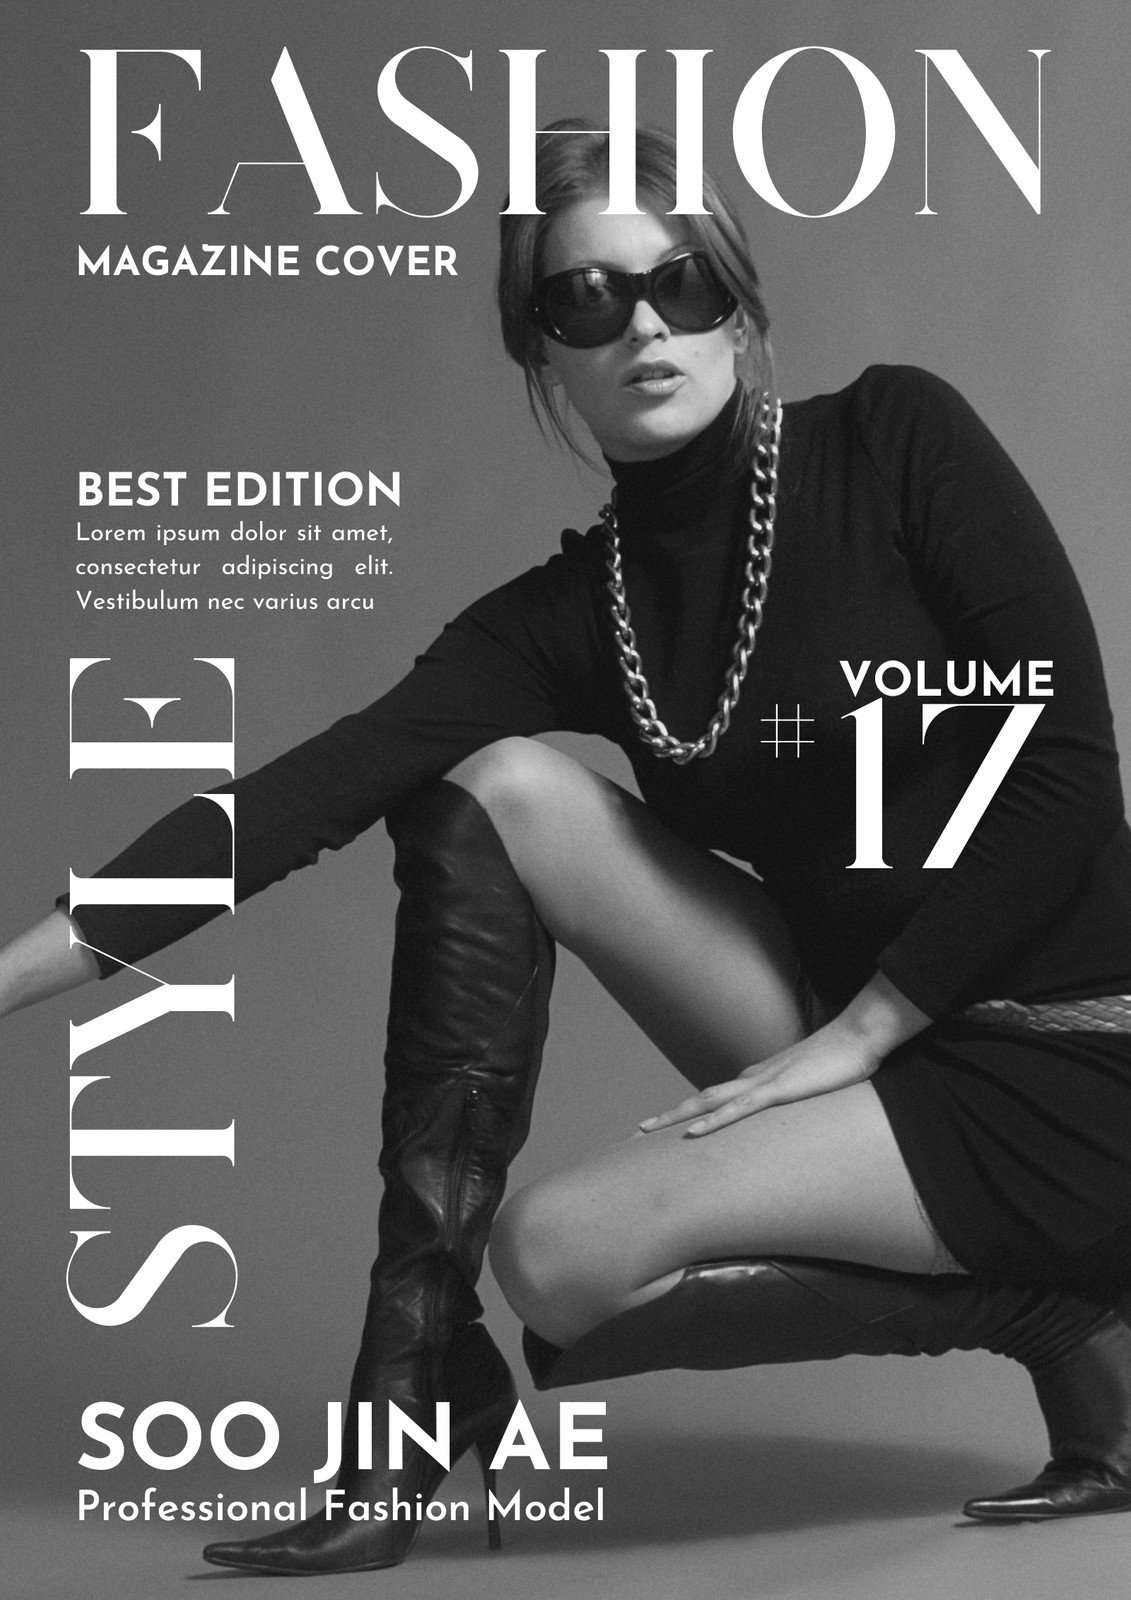 Black and White Classic Fashion Magazine Cover